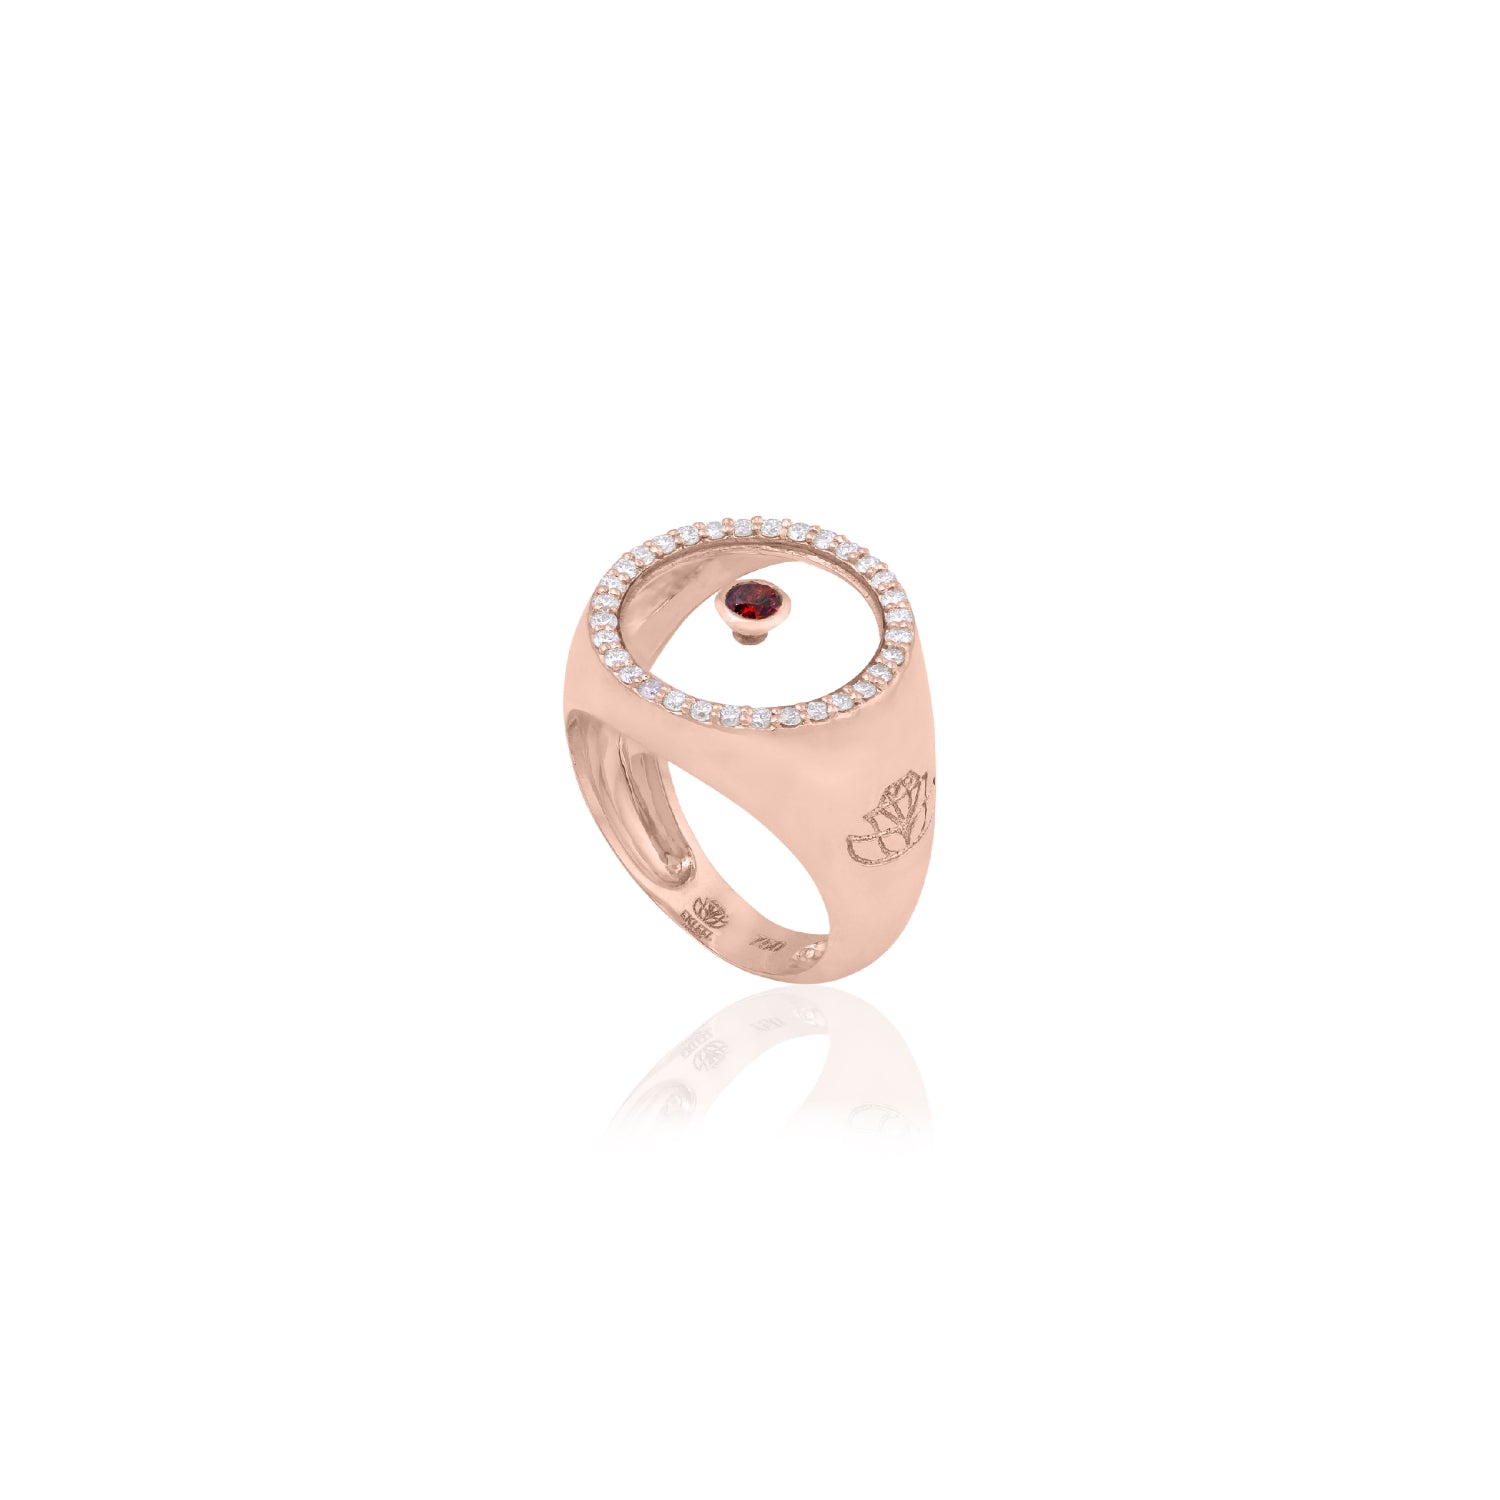 Garnet January Birthstone Ring in Rose Gold